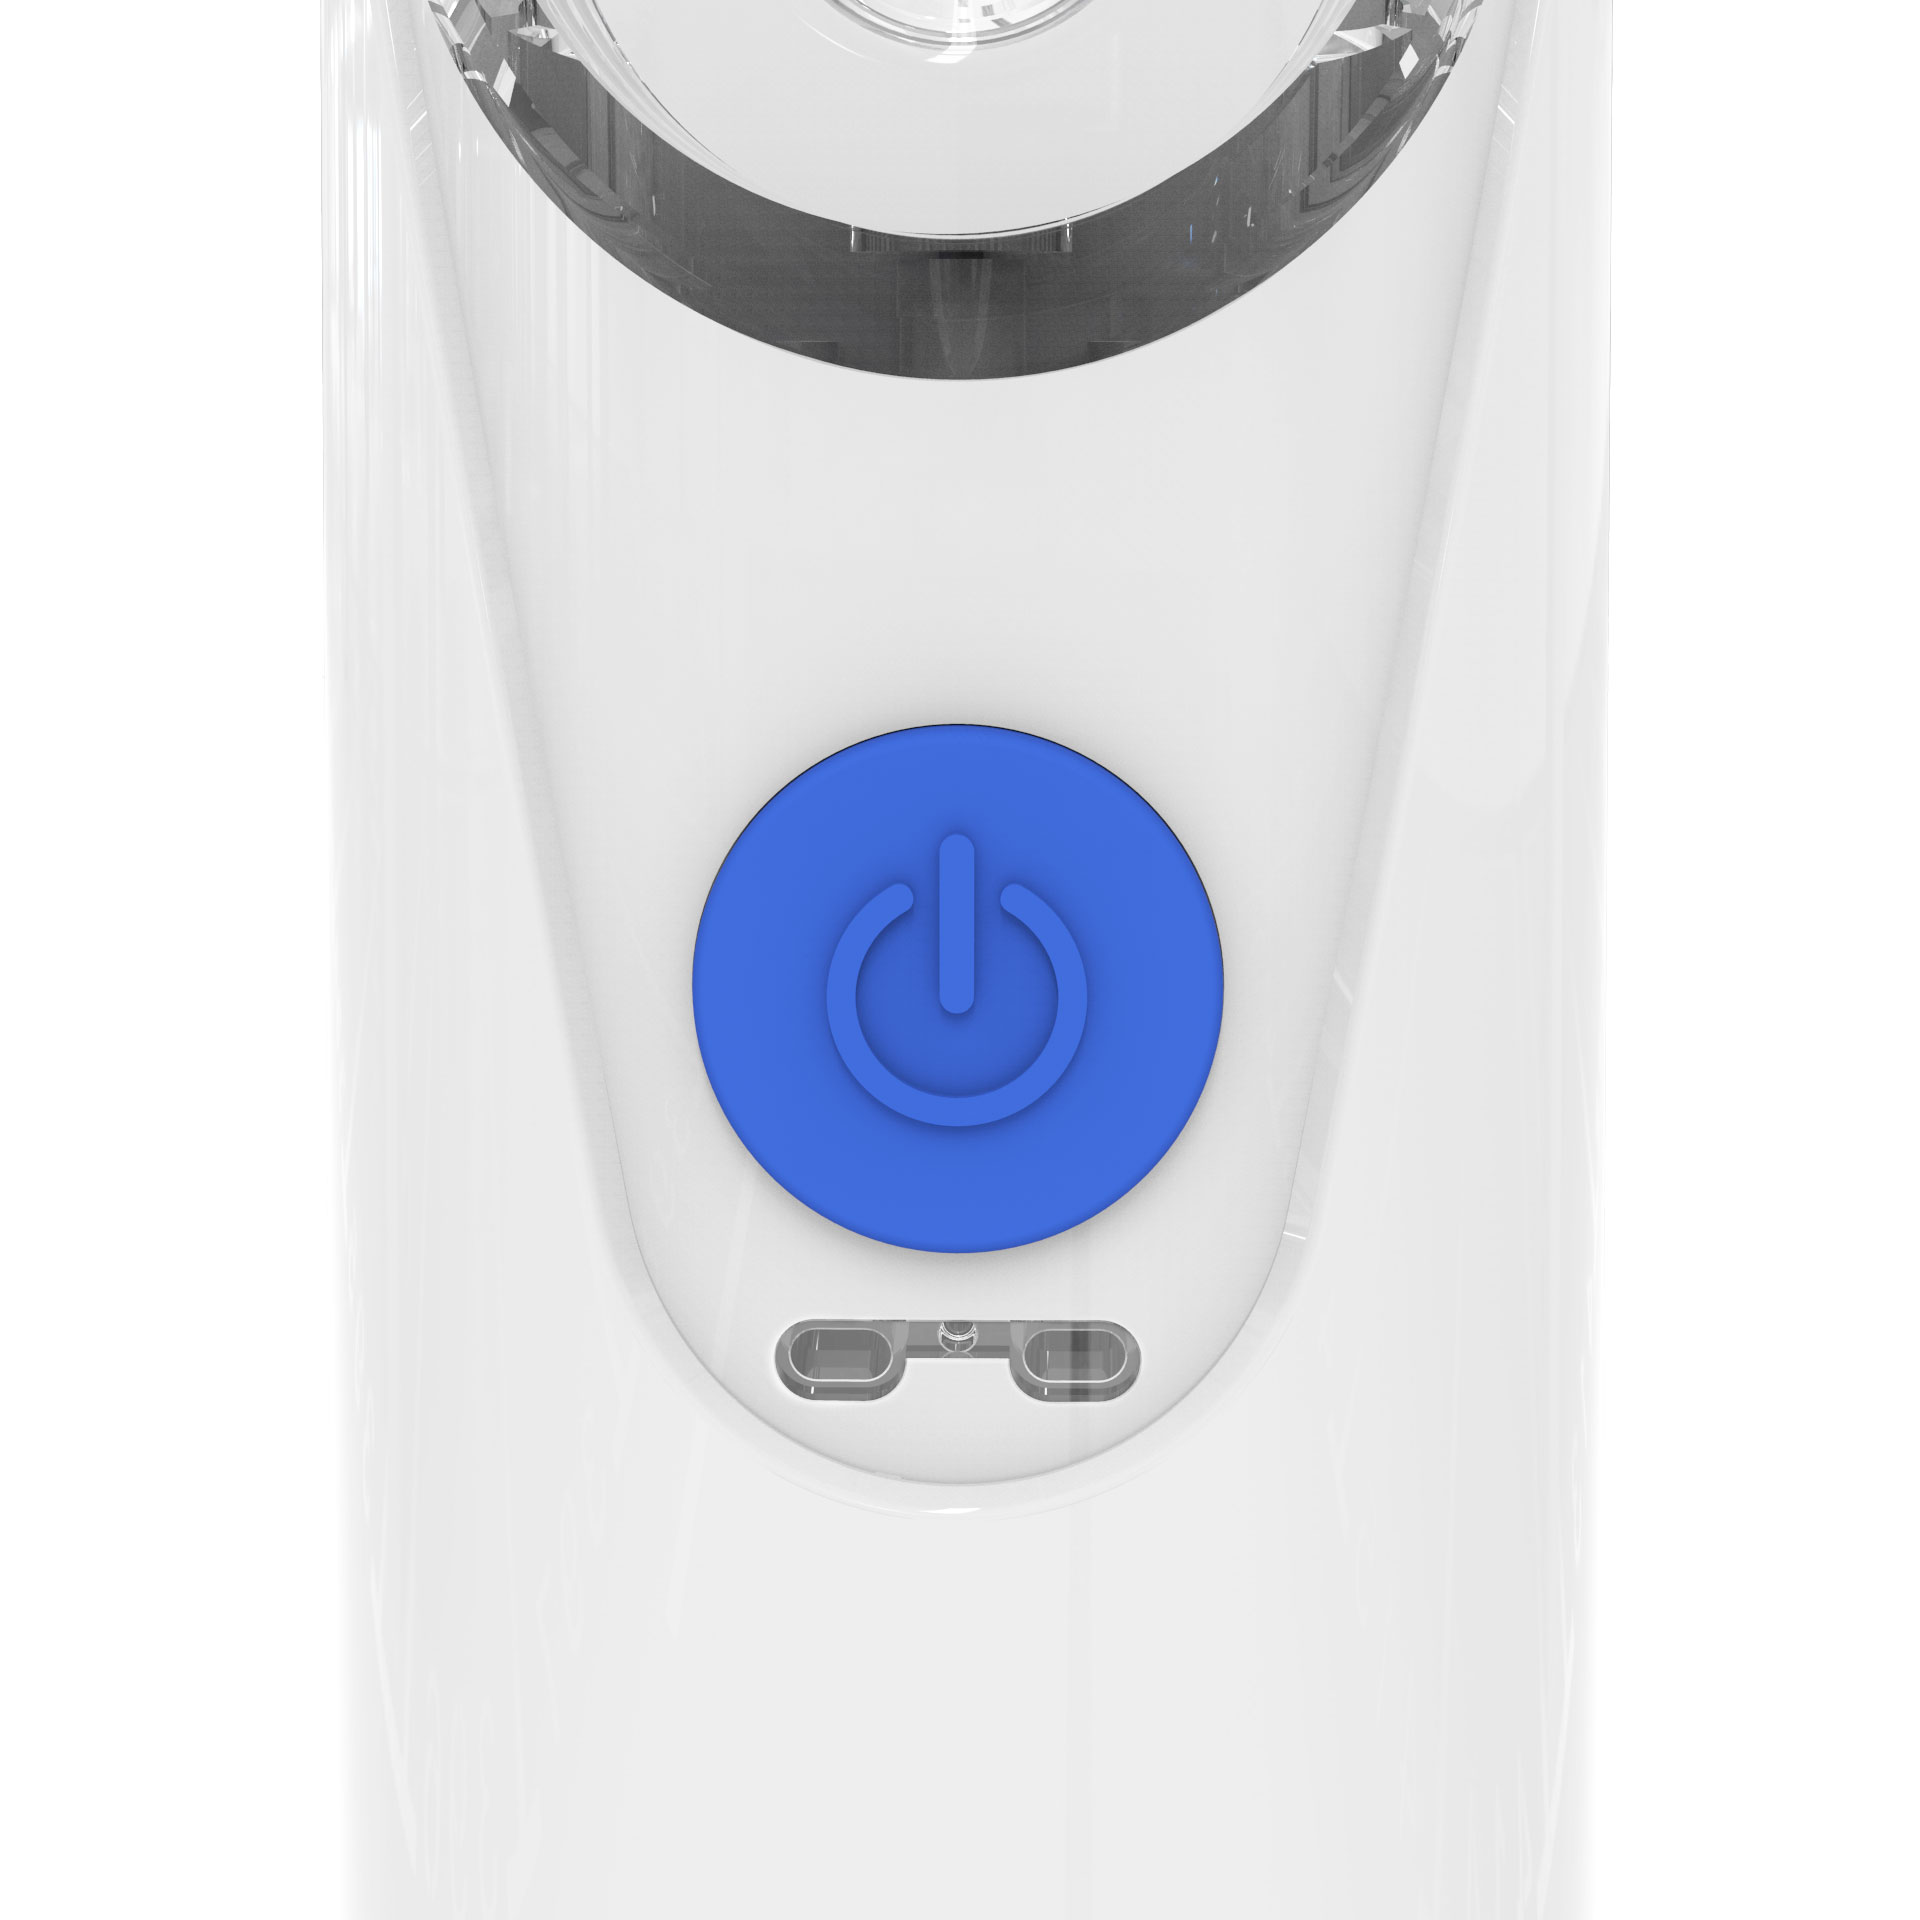 MS-N400 Medical Ultrasonic Nebulizer